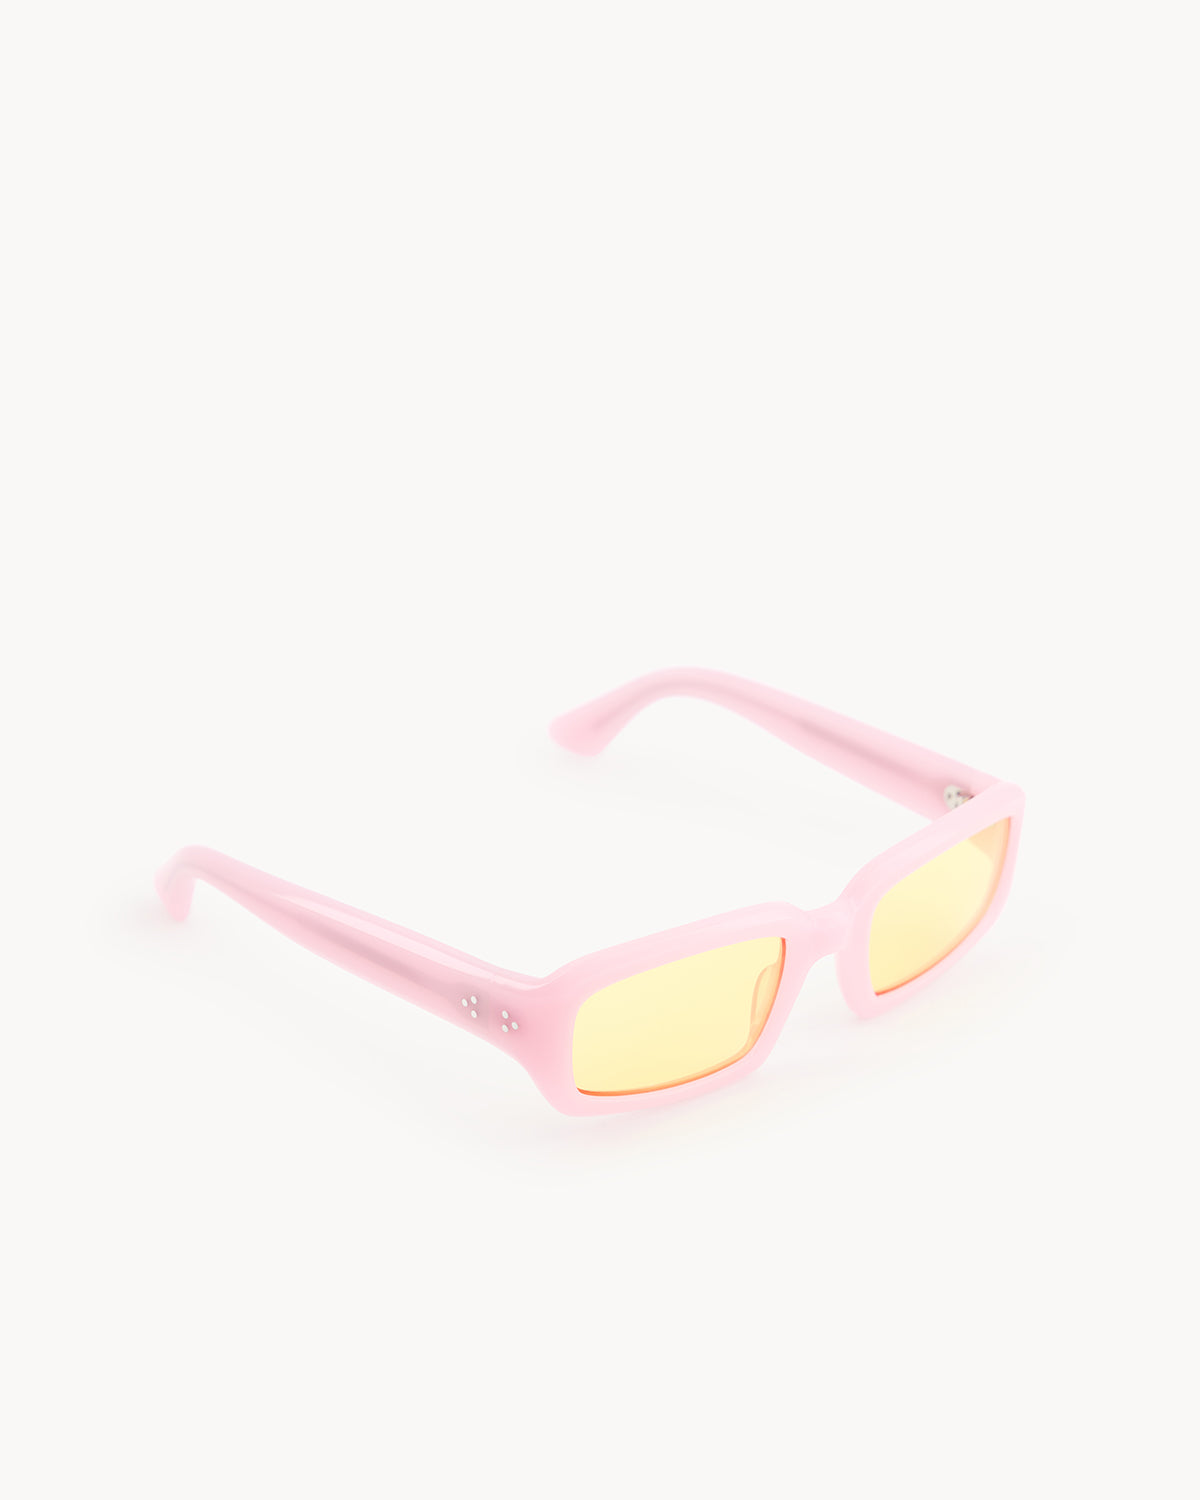 Port Tanger Mektoub Sunglasses in Muddy Pink Acetate and Tangerine Lenses 2